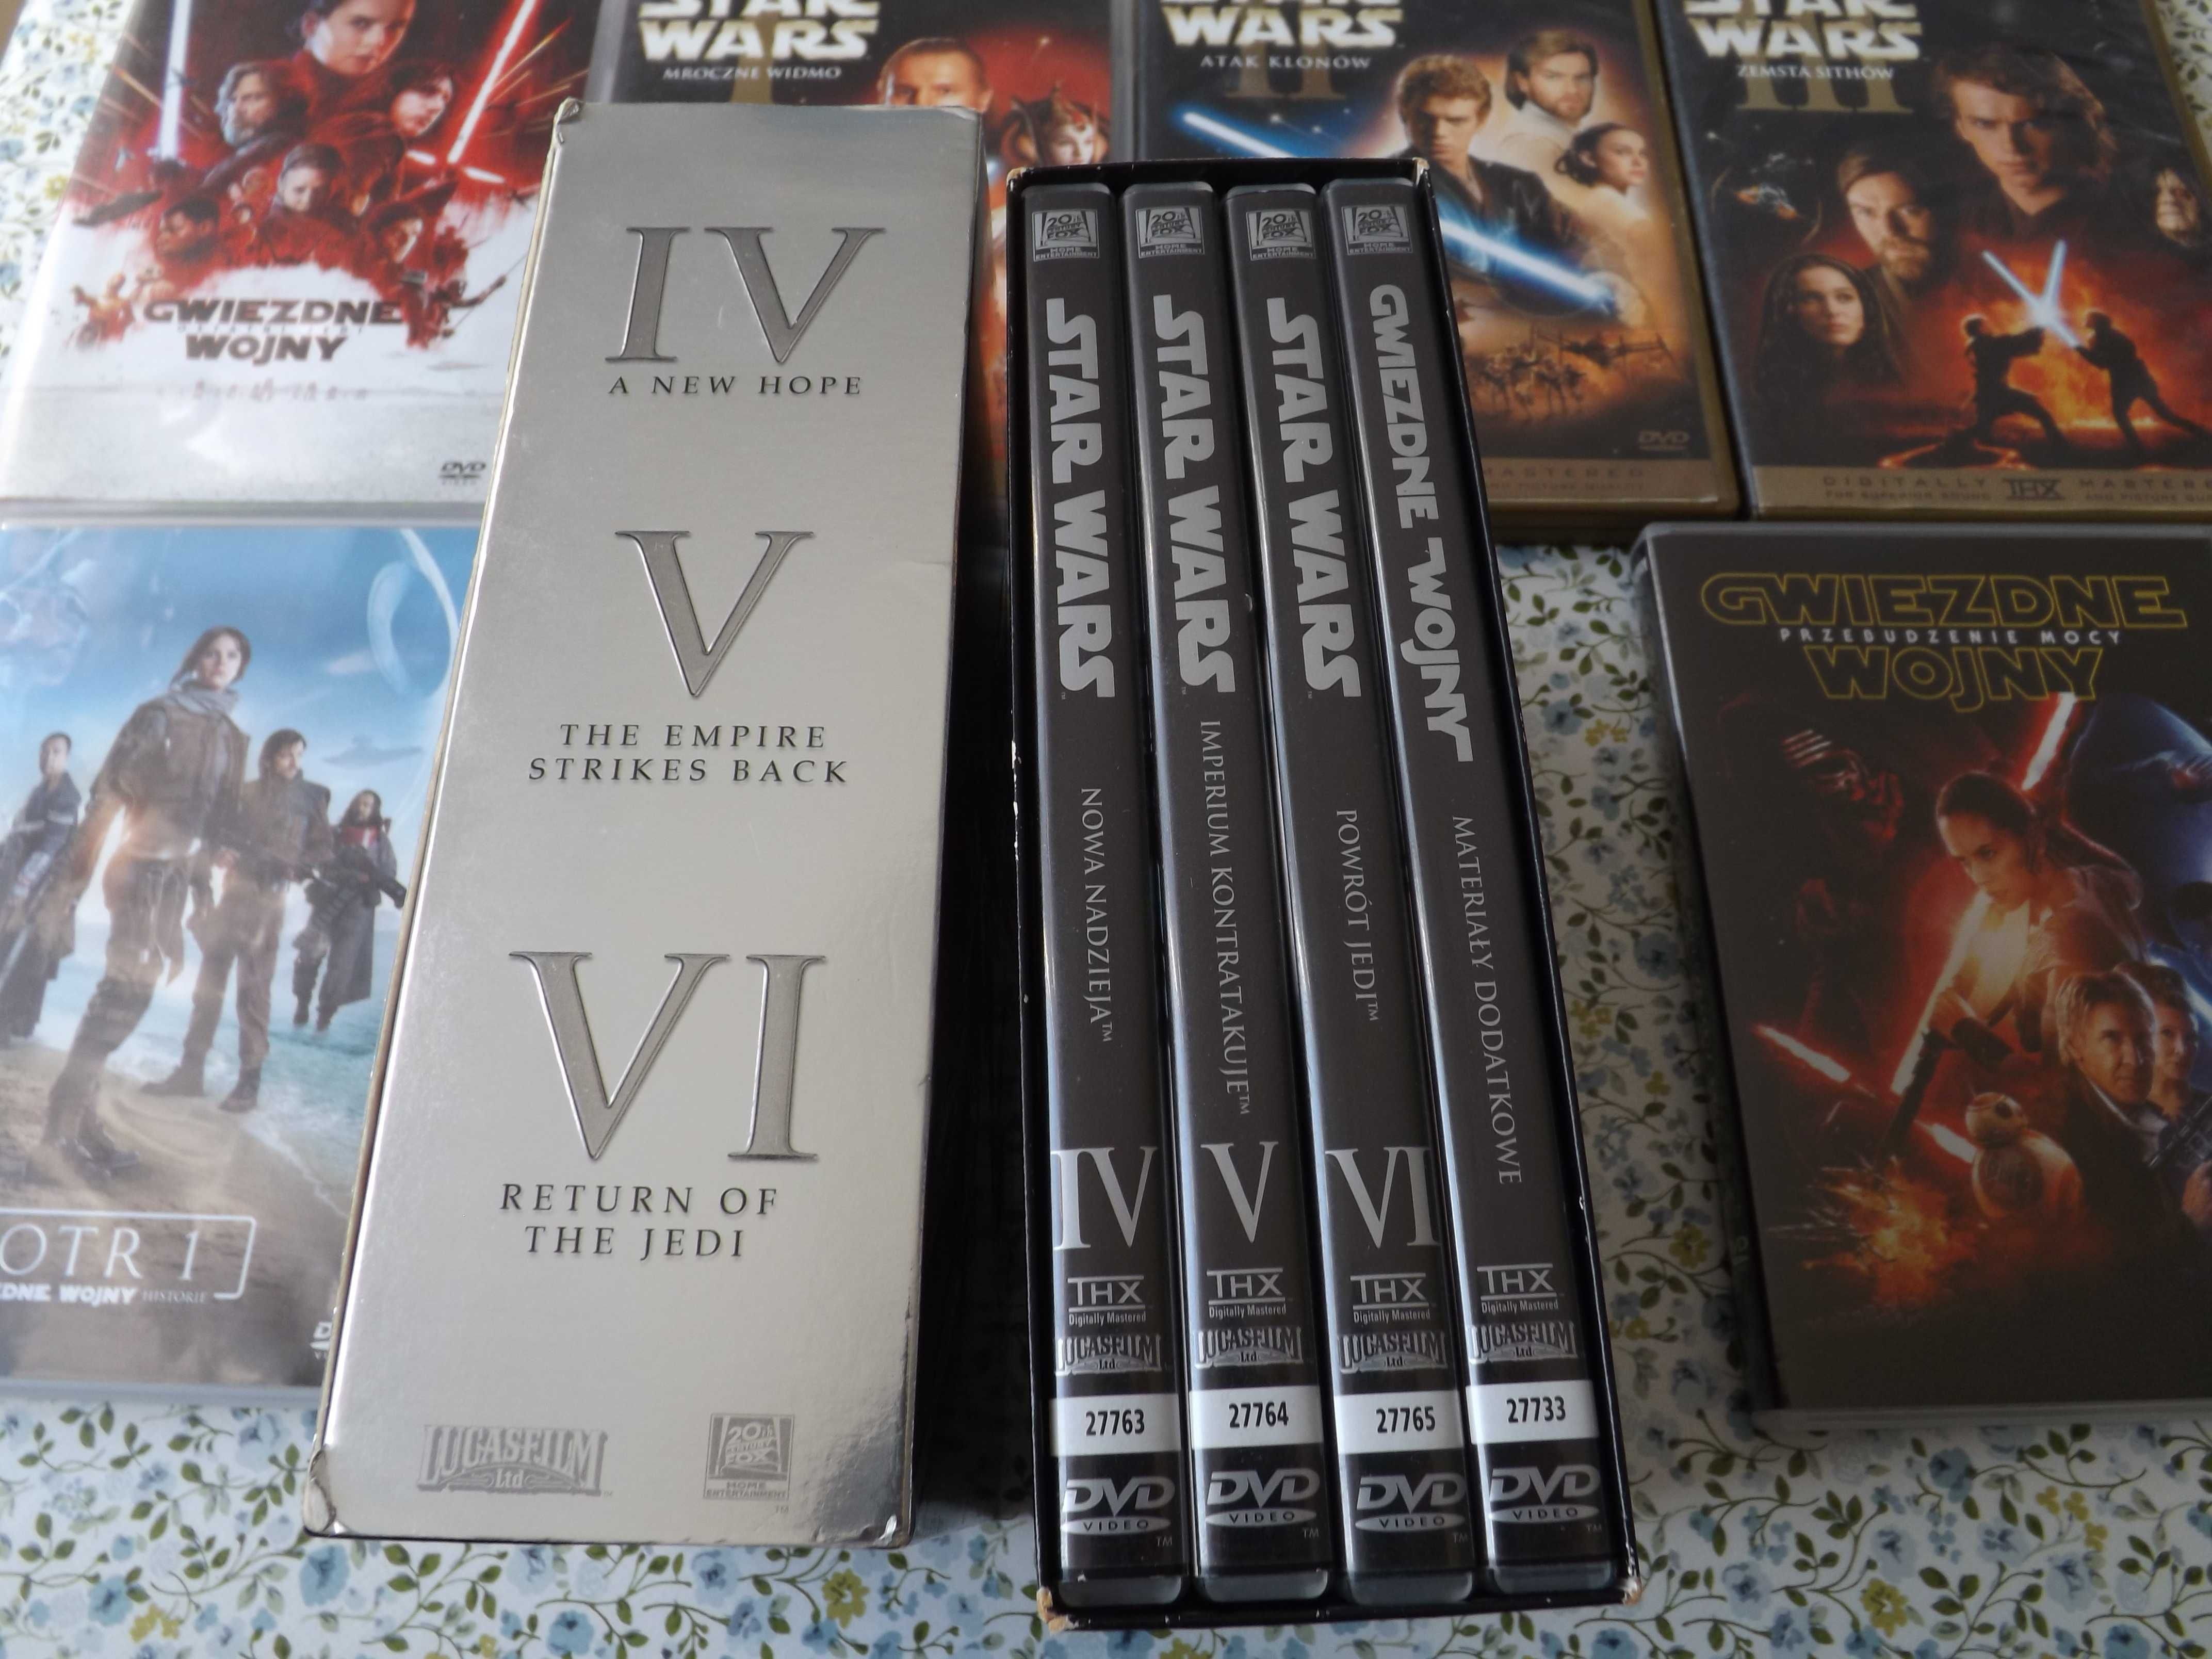 Star Wars trylogia film bajka IV, V, VI  kolekcja